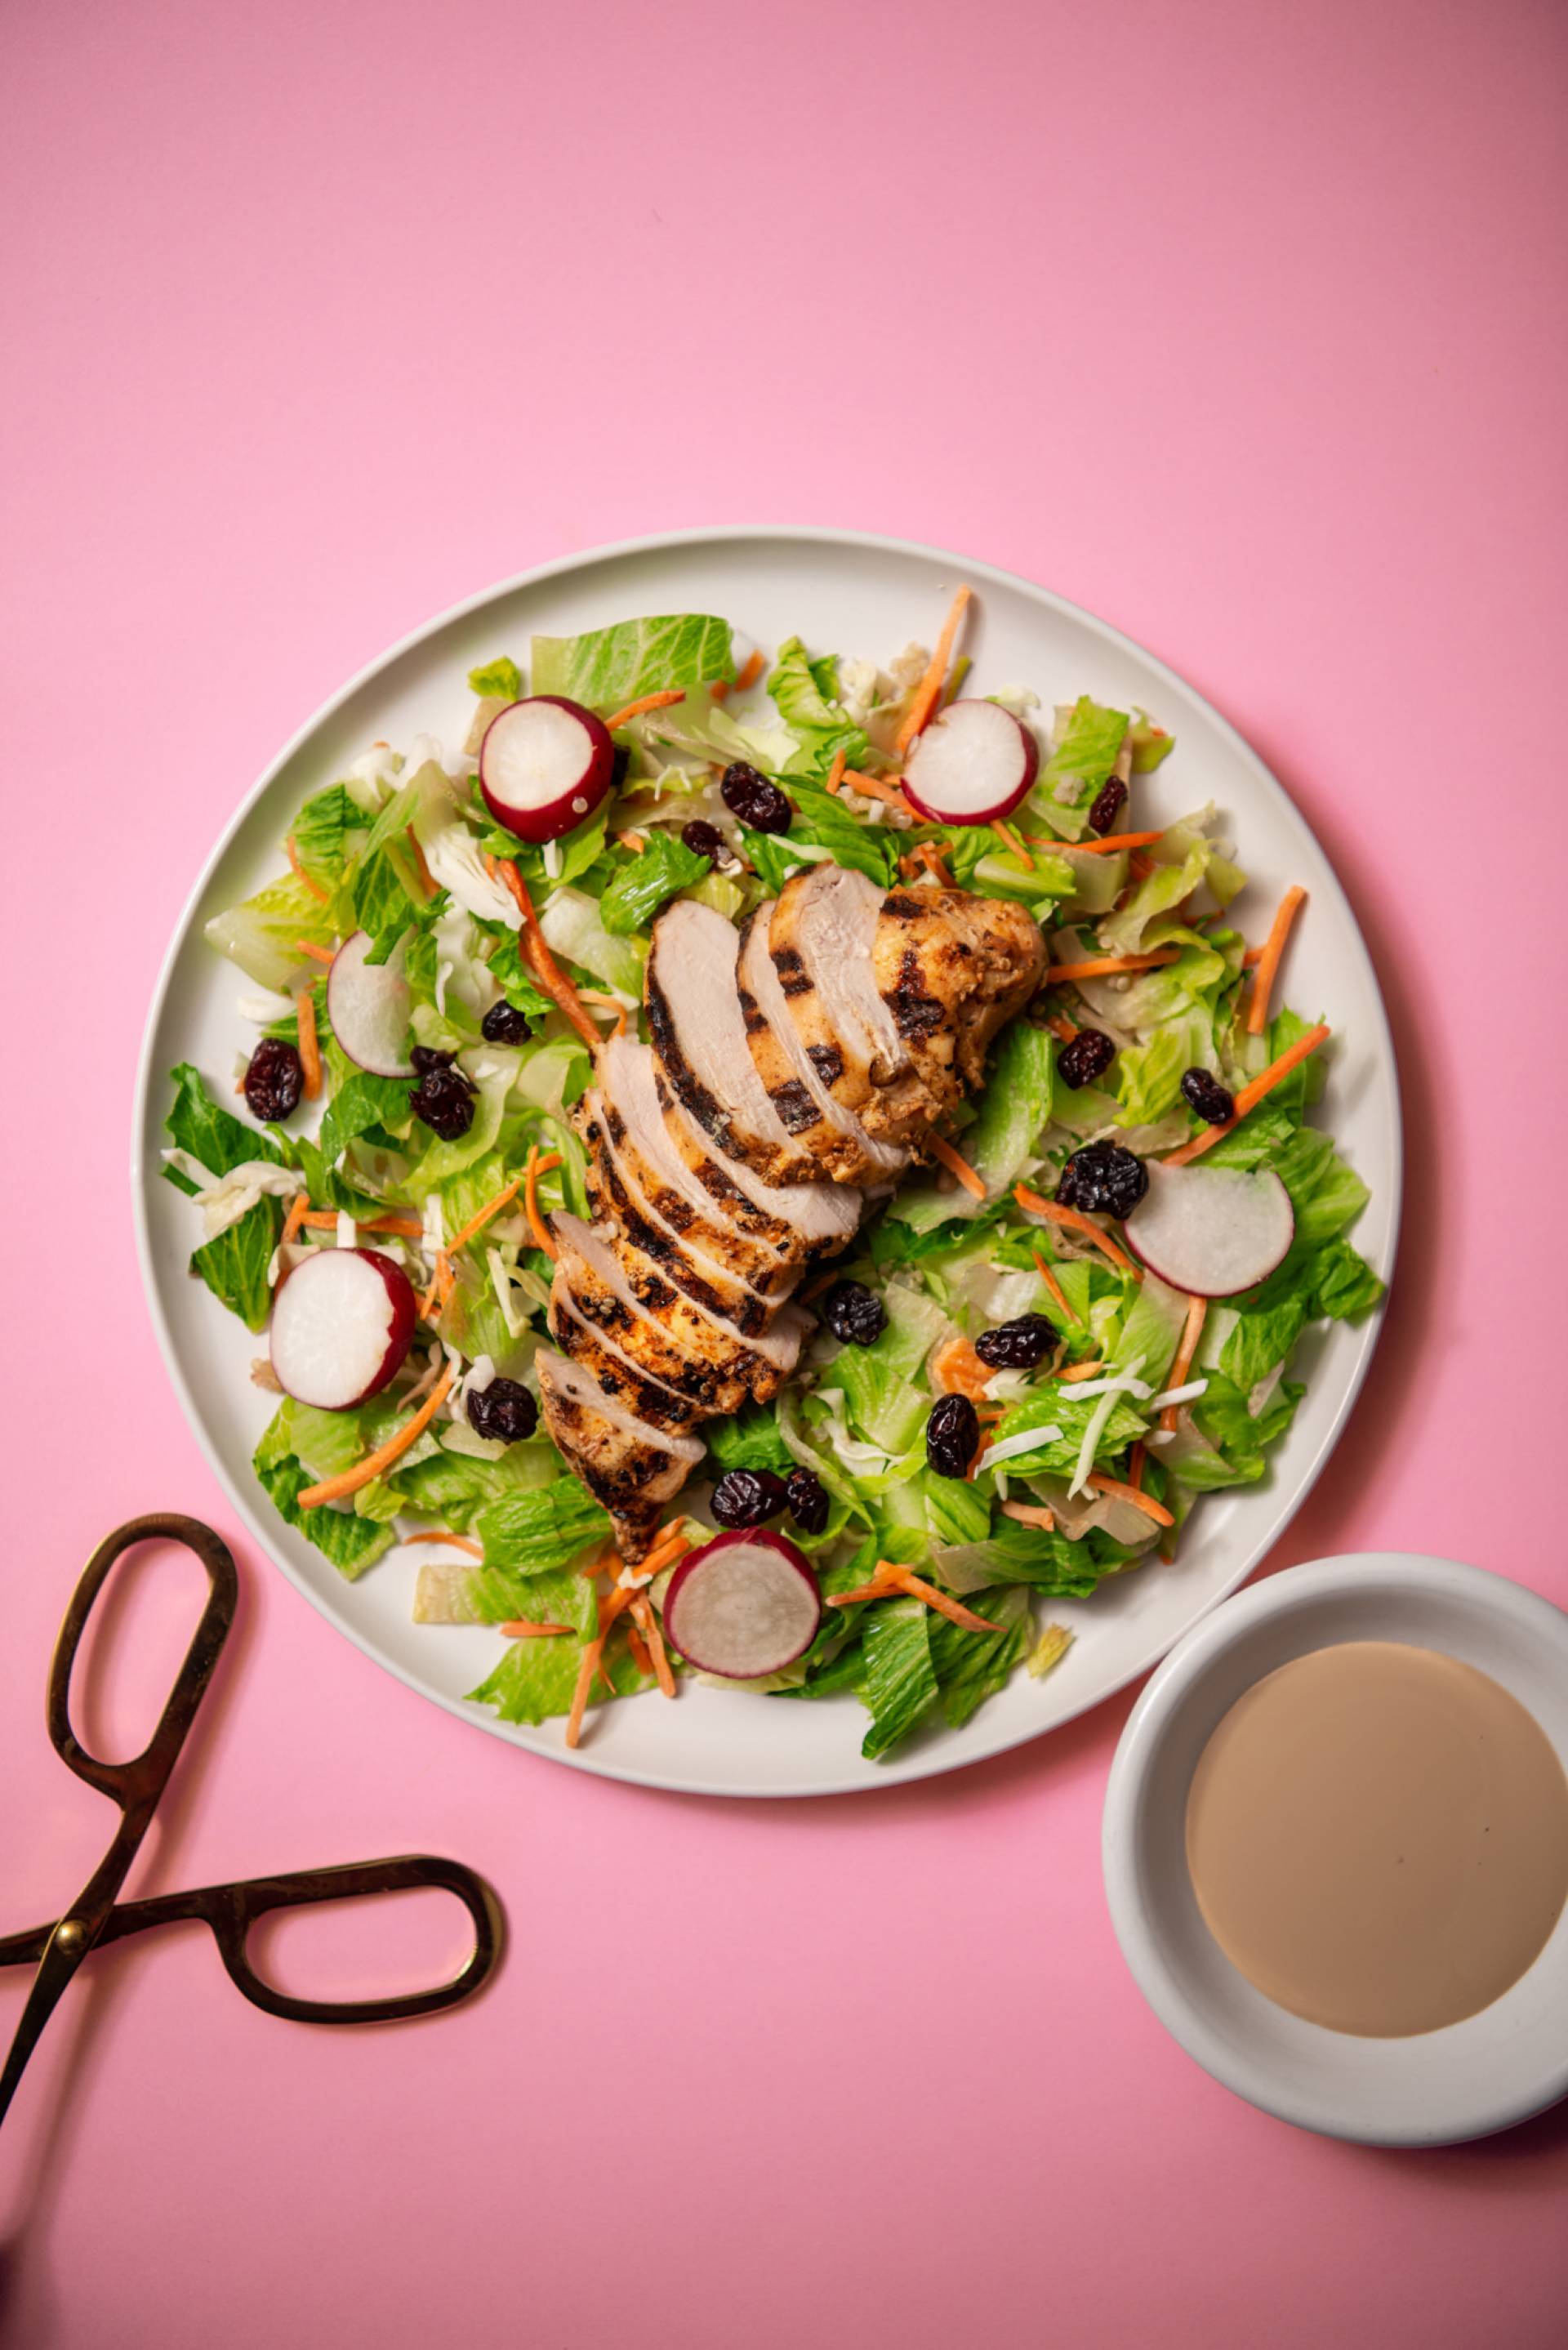 Mega Crunchy Romaine Salad with Chicken